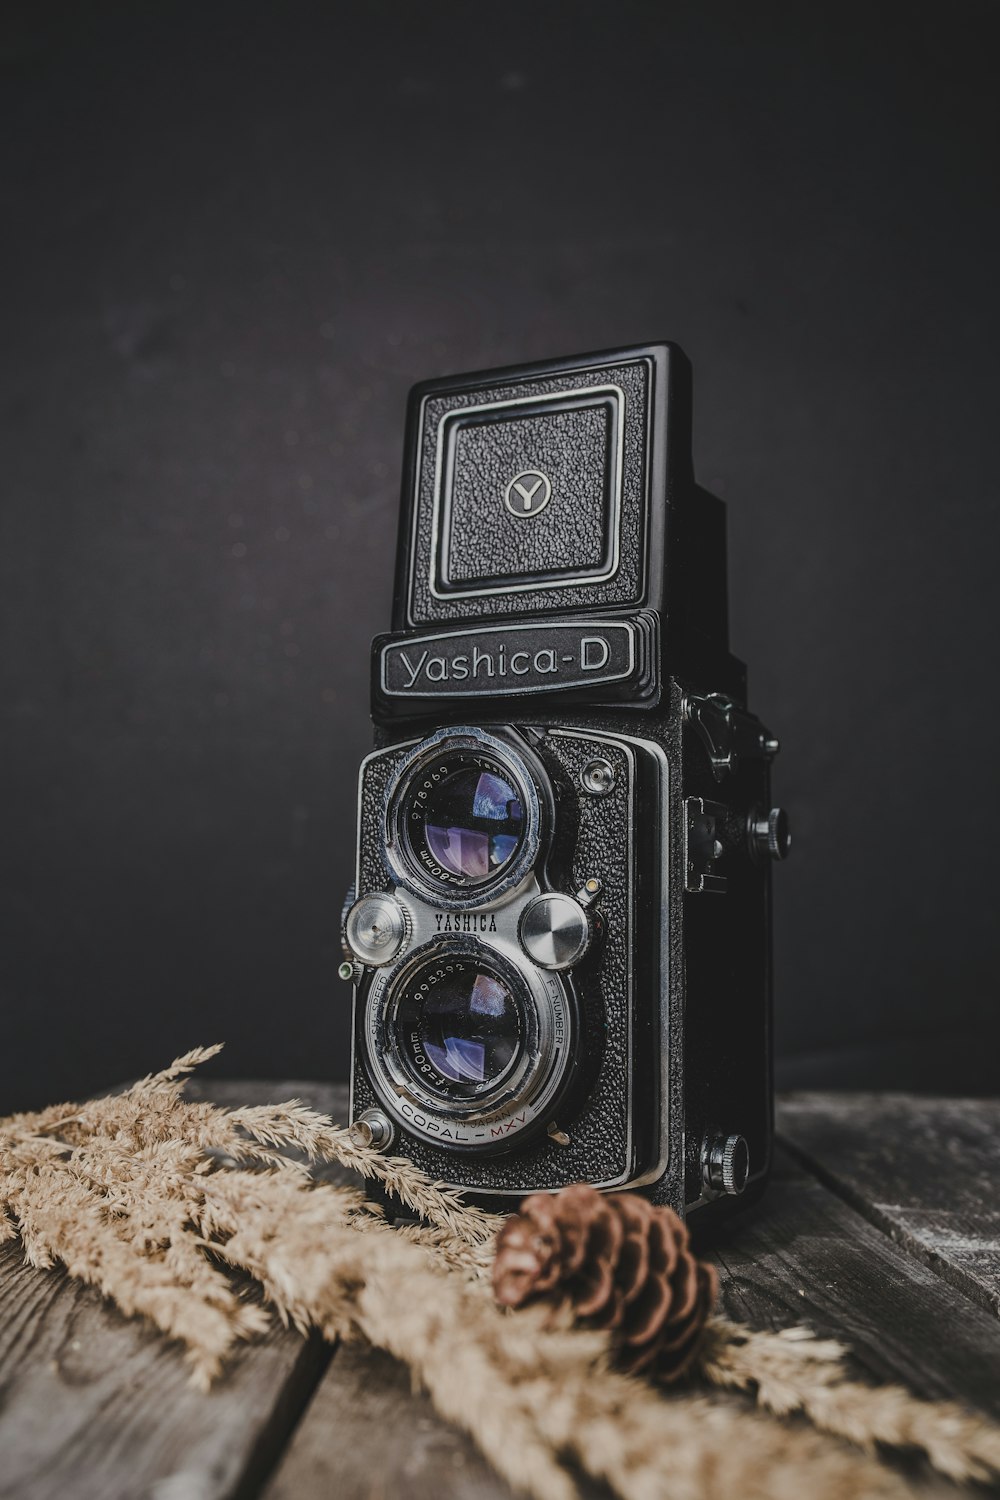 schwarze Yashica-D Kamera